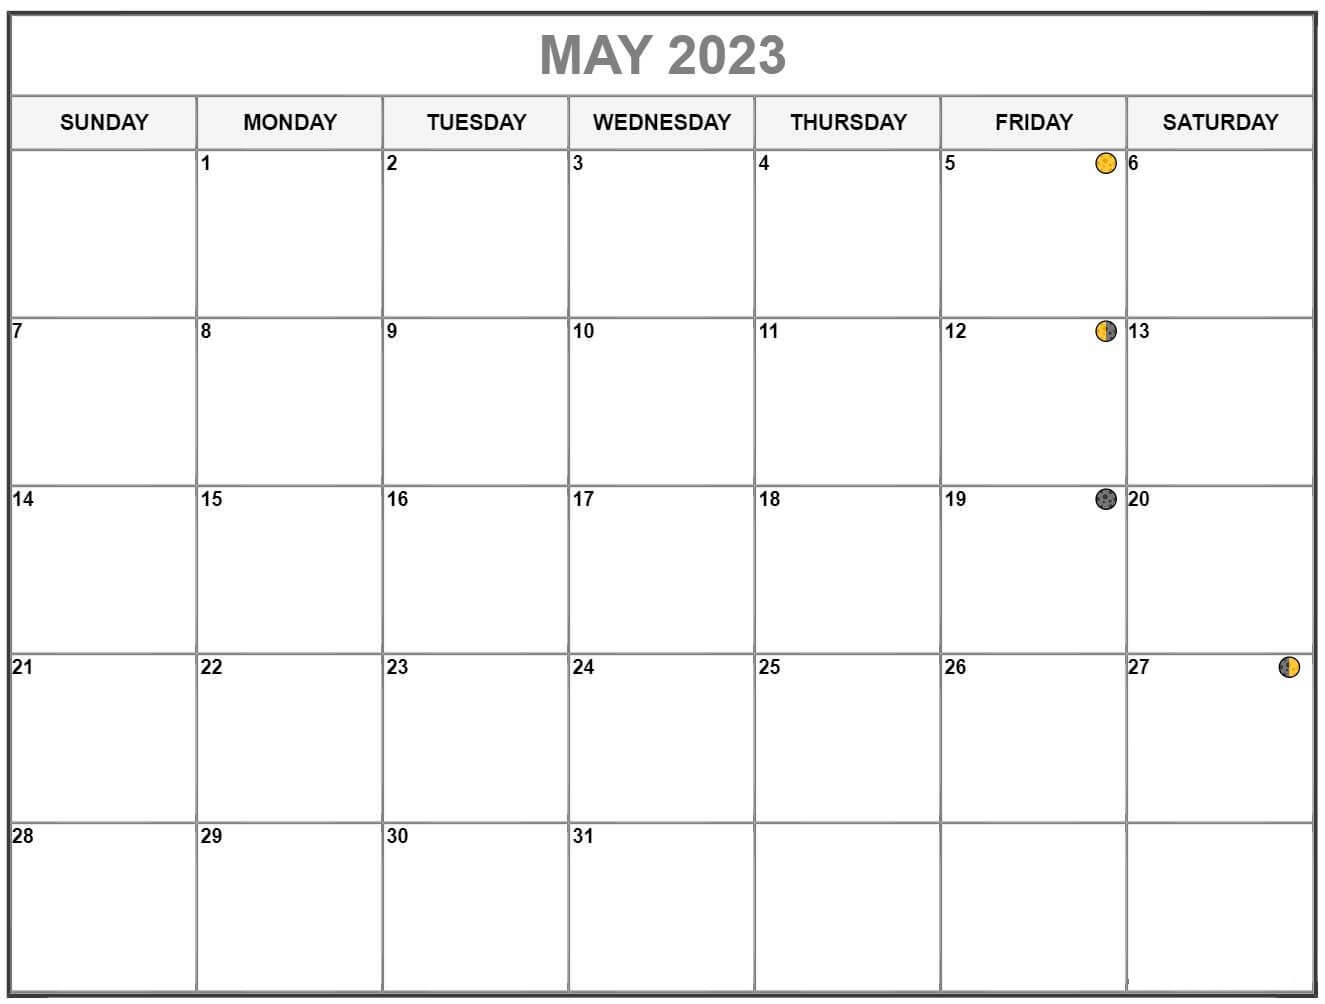 May 2023 Calendar Lunar